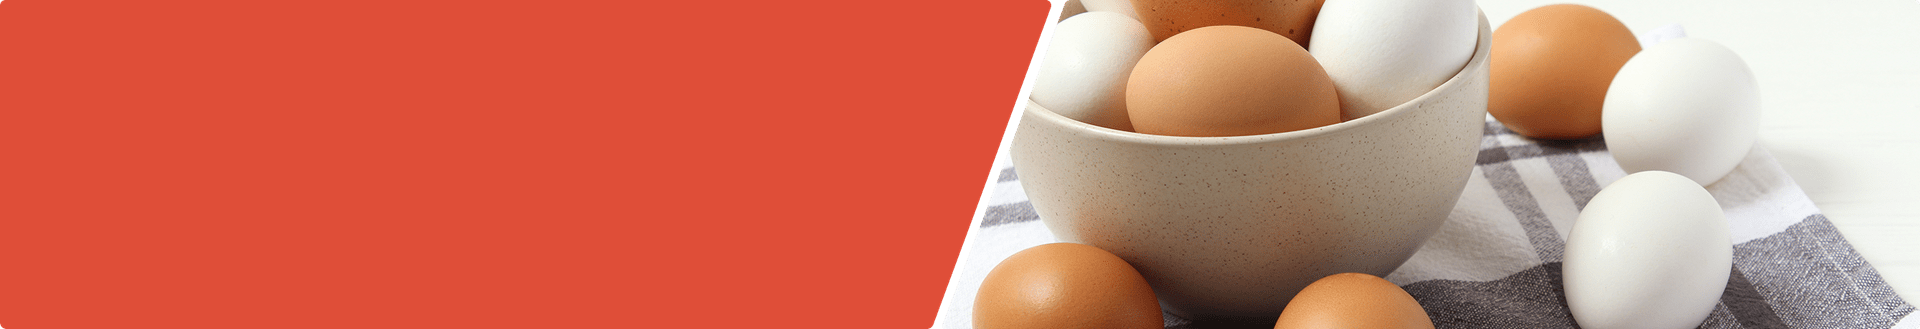 achter Riskeren Afstoting Eieren en cholesterol